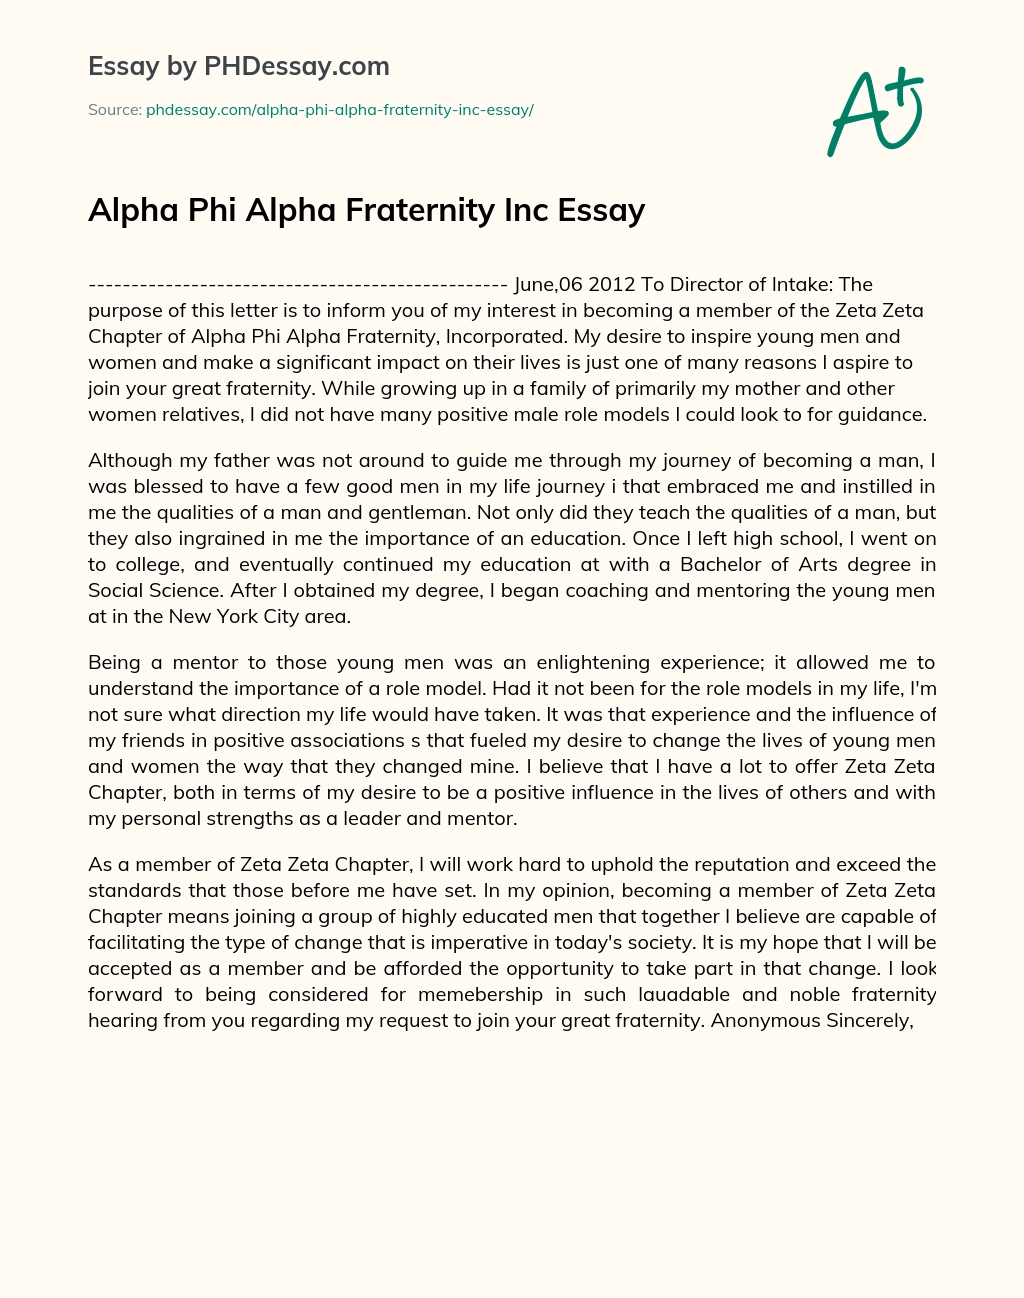 Alpha Phi Alpha Fraternity Inc Essay essay